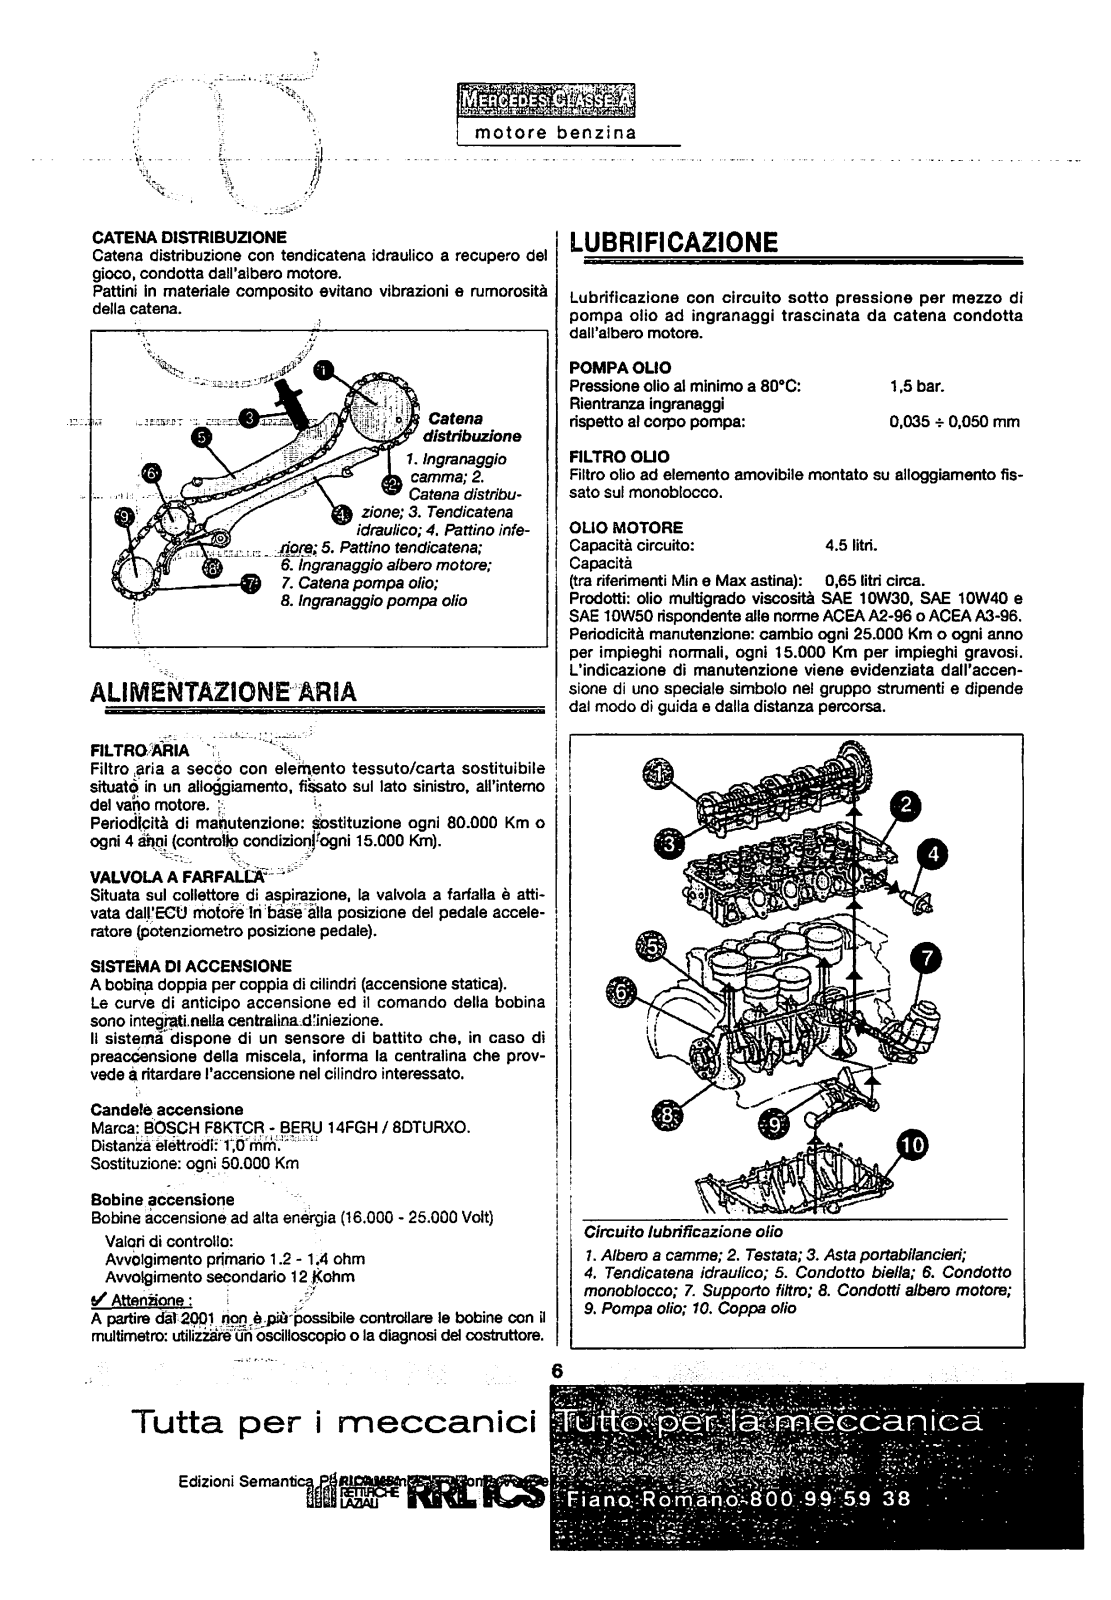 w168 - (W168): Manual técnico - tudo sobre - 1997 a 2004 - italiano 2jdovu9